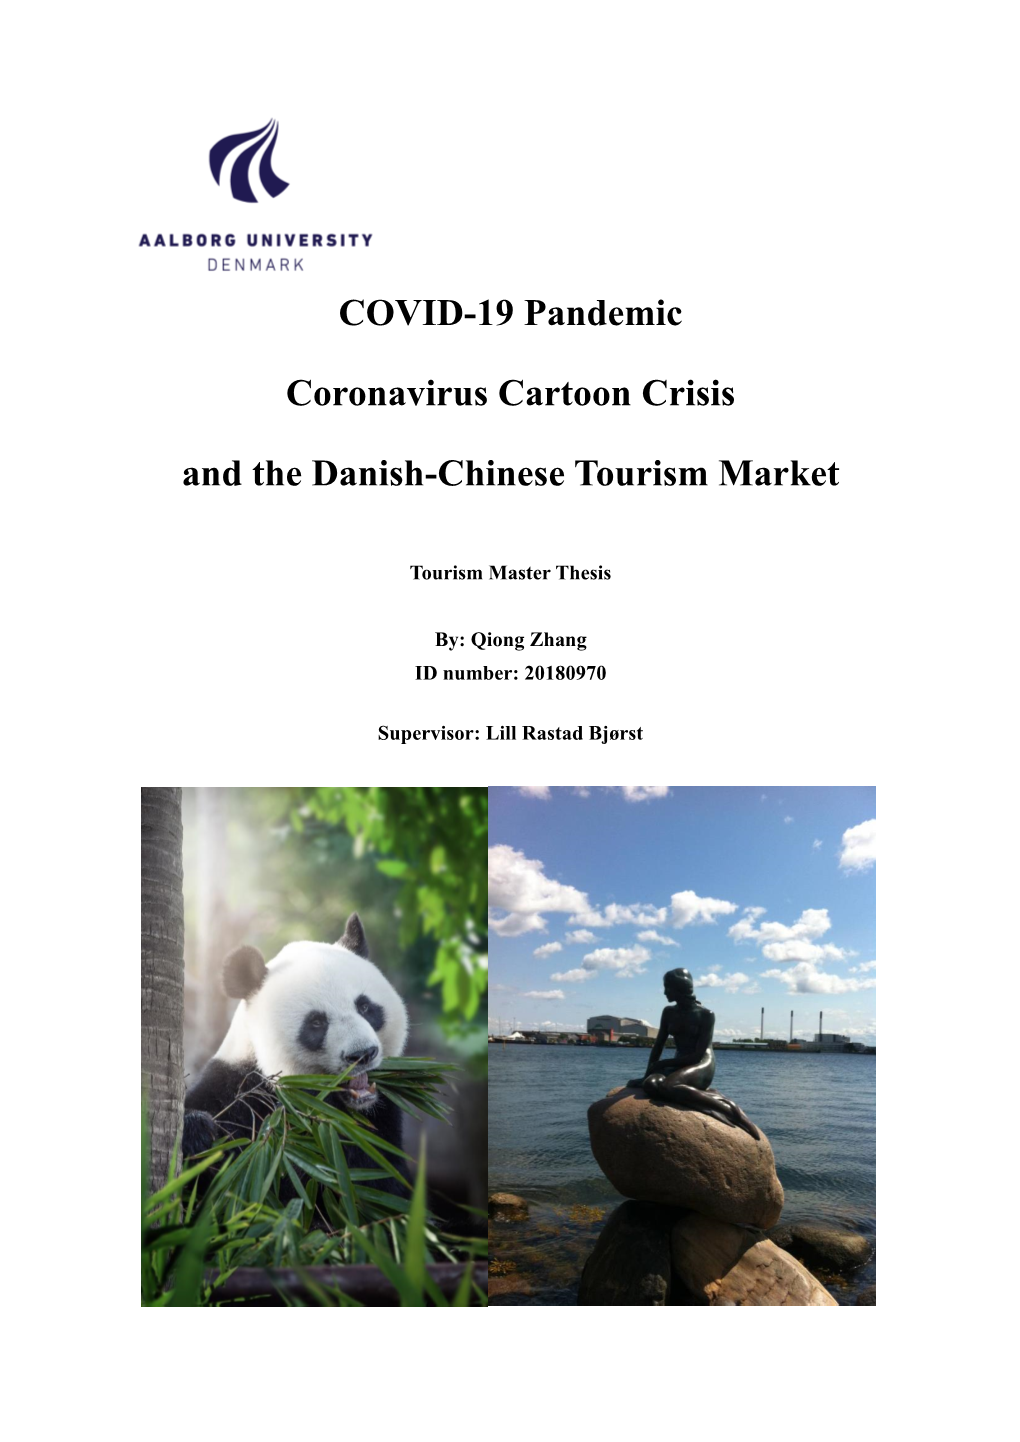 COVID-19 Pandemic Coronavirus Cartoon Crisis and the Danish